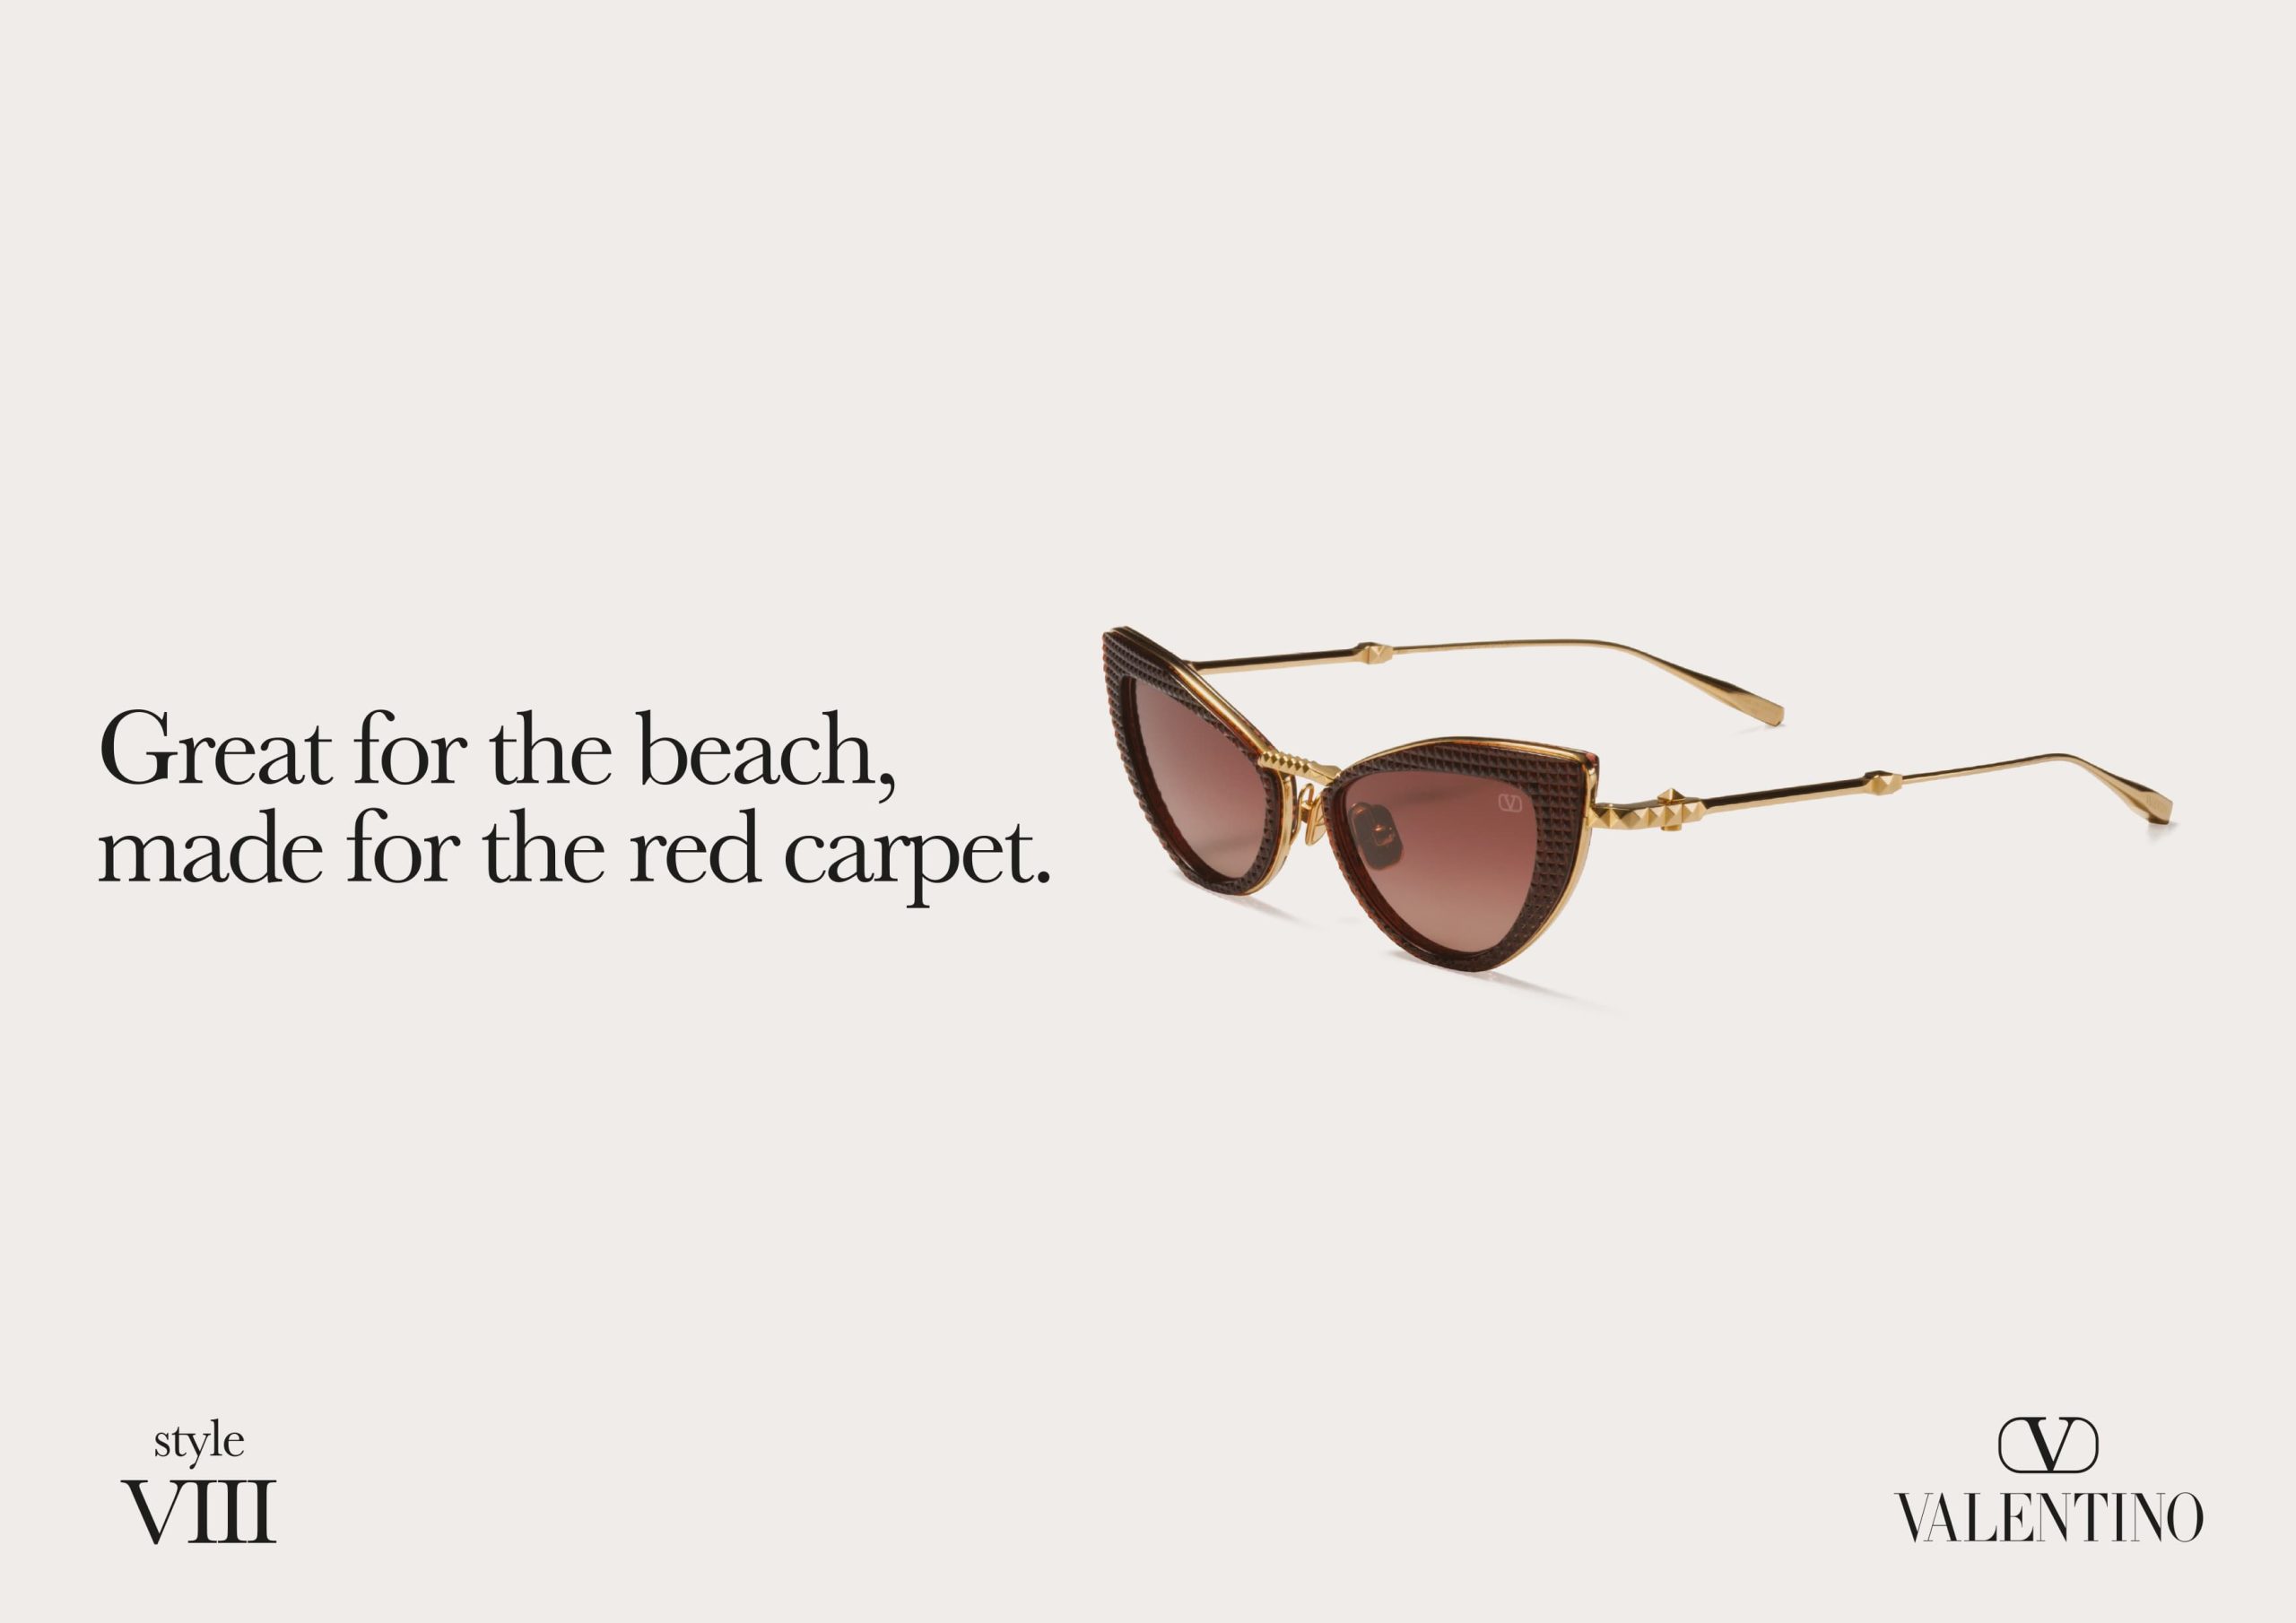 Valentino eyewear ad campaign 2022